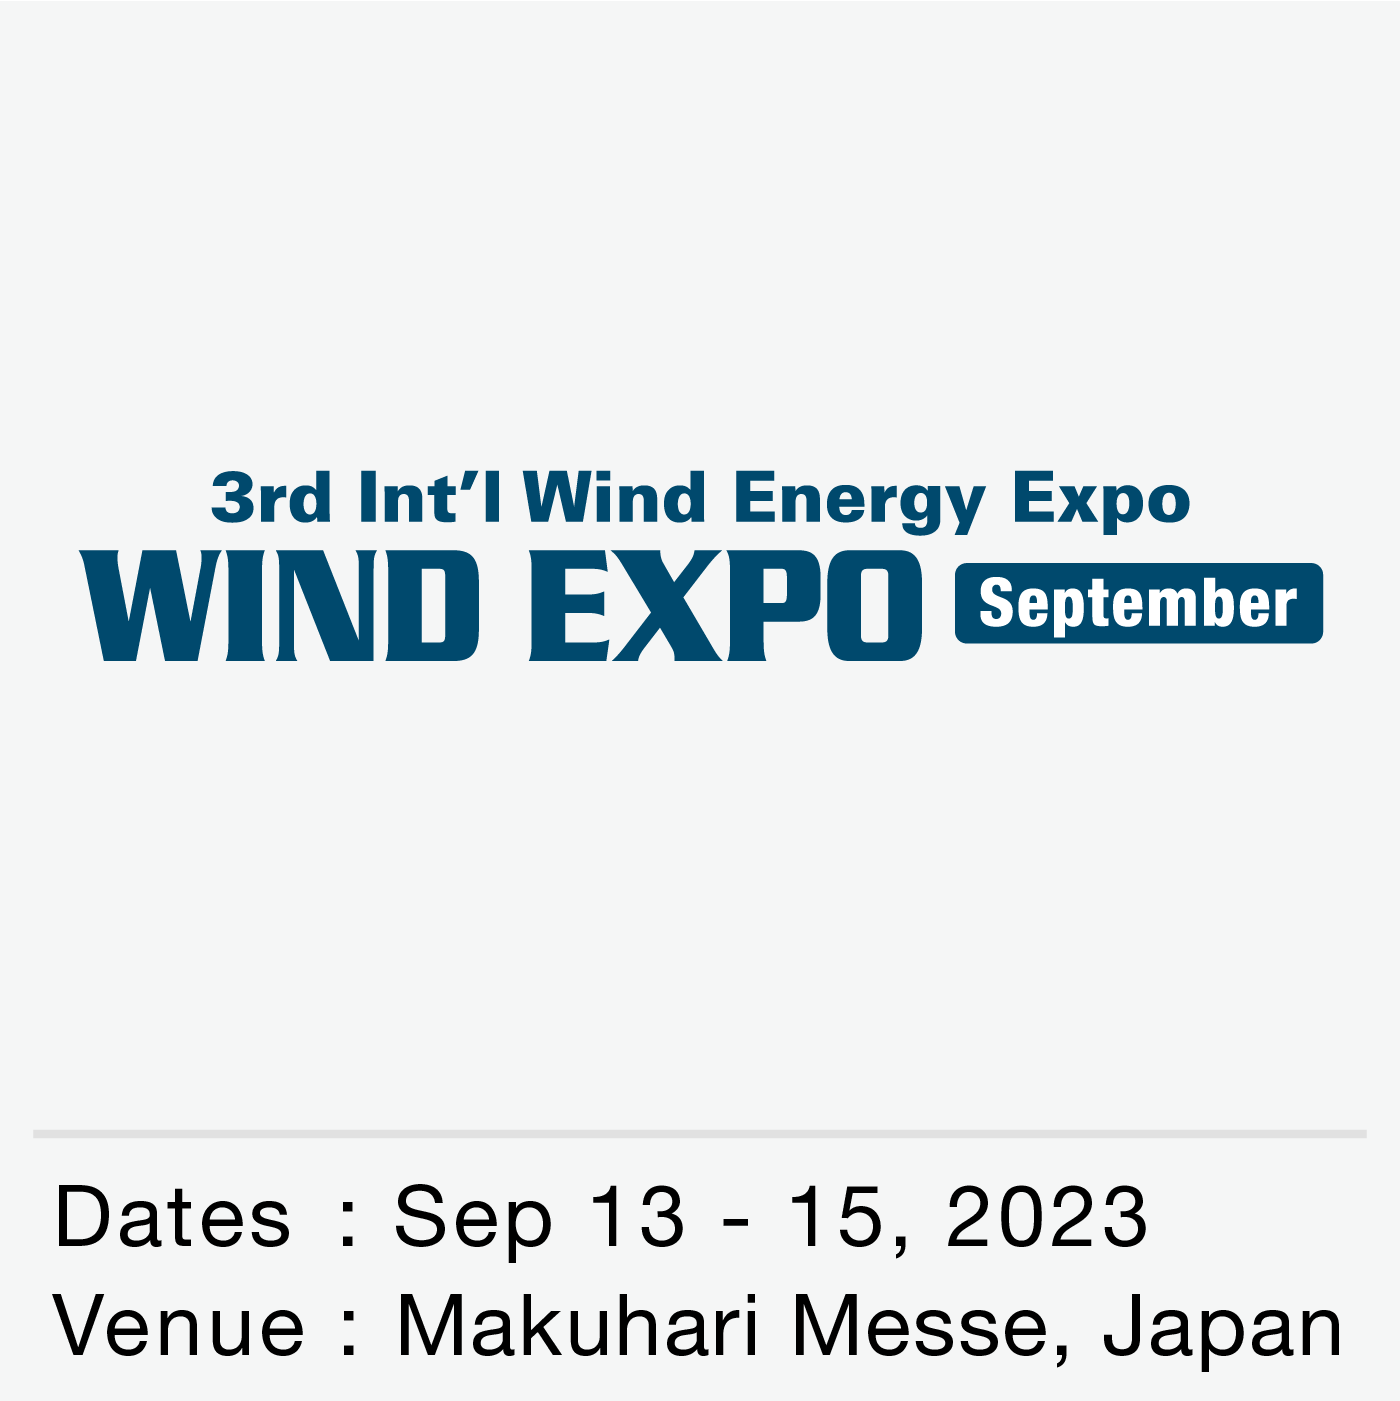 WIND EXPO [September]